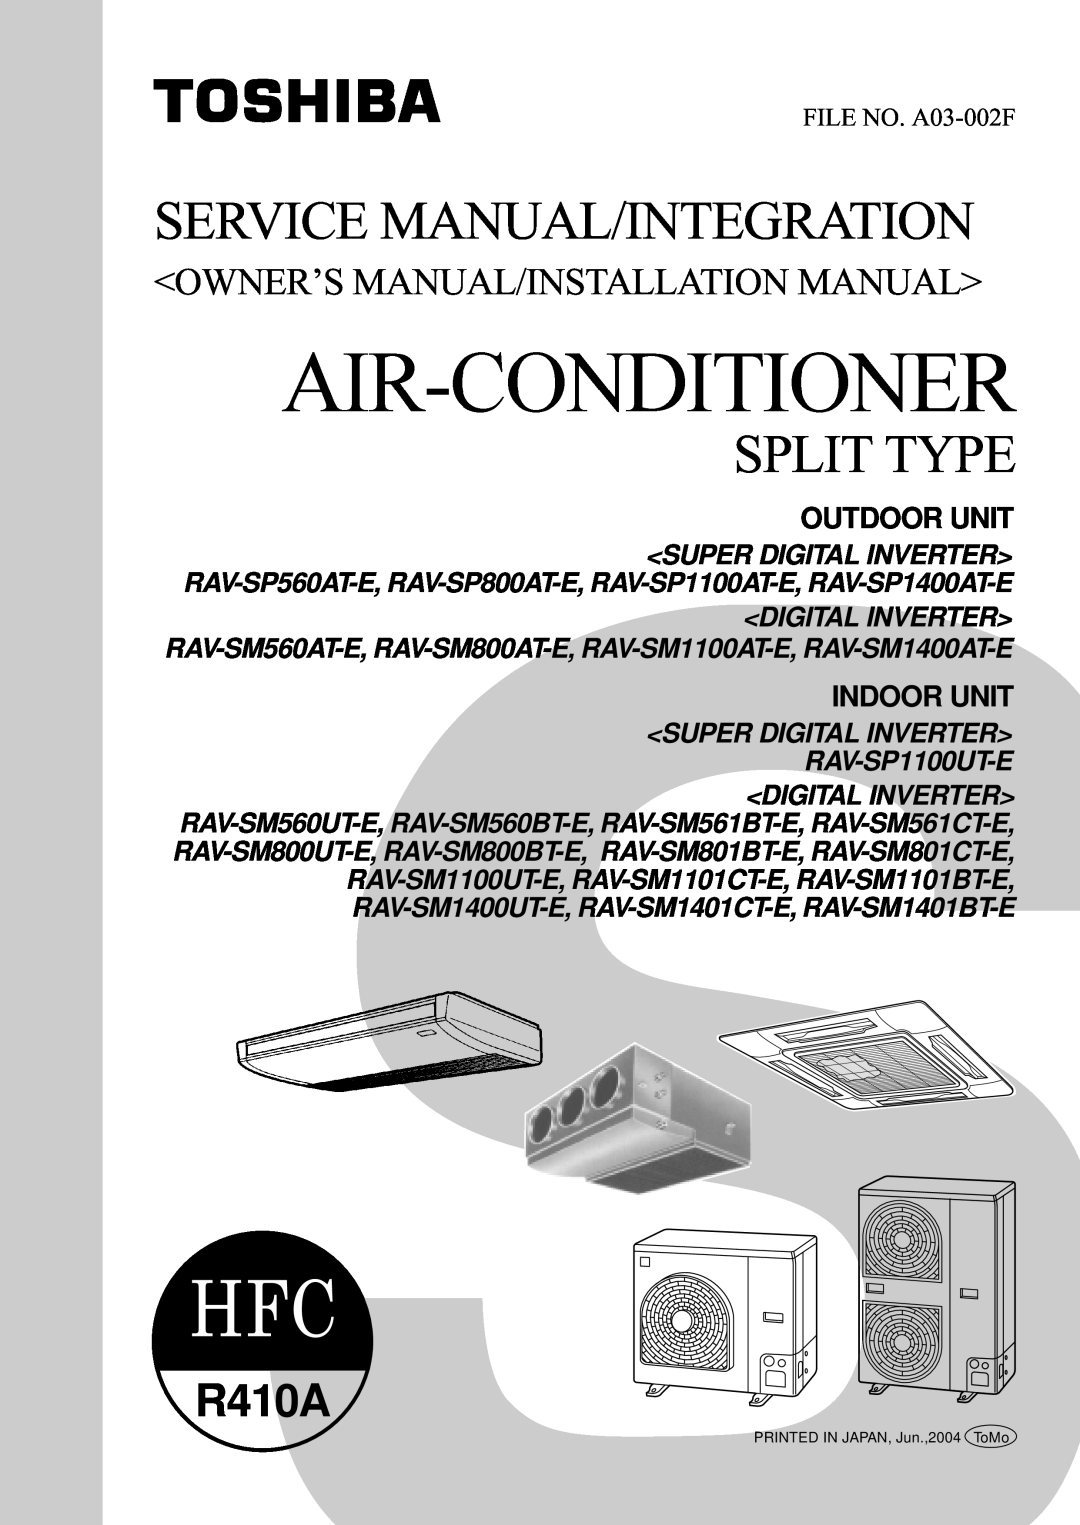 Balcar R410A service manual <Owner’S Manual/Installation Manual>, Outdoor Unit, Indoor Unit, Service Manual/Integration 